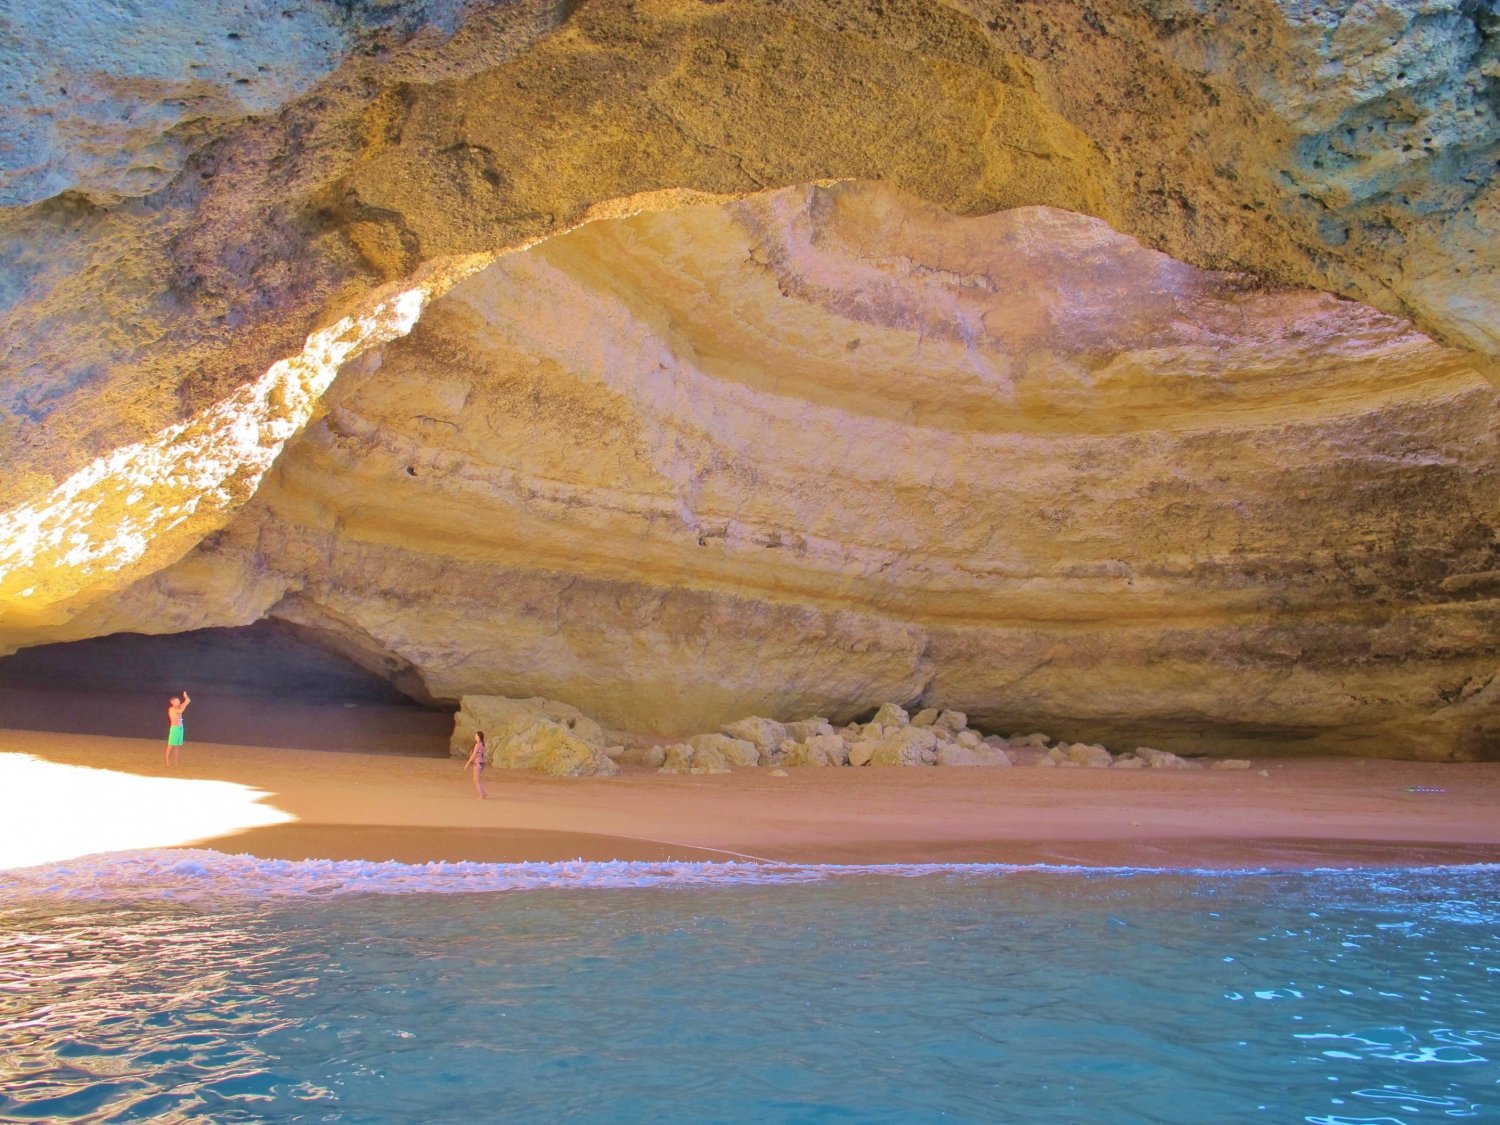 How to visit the Benagil Cave, Algarve, Portugal